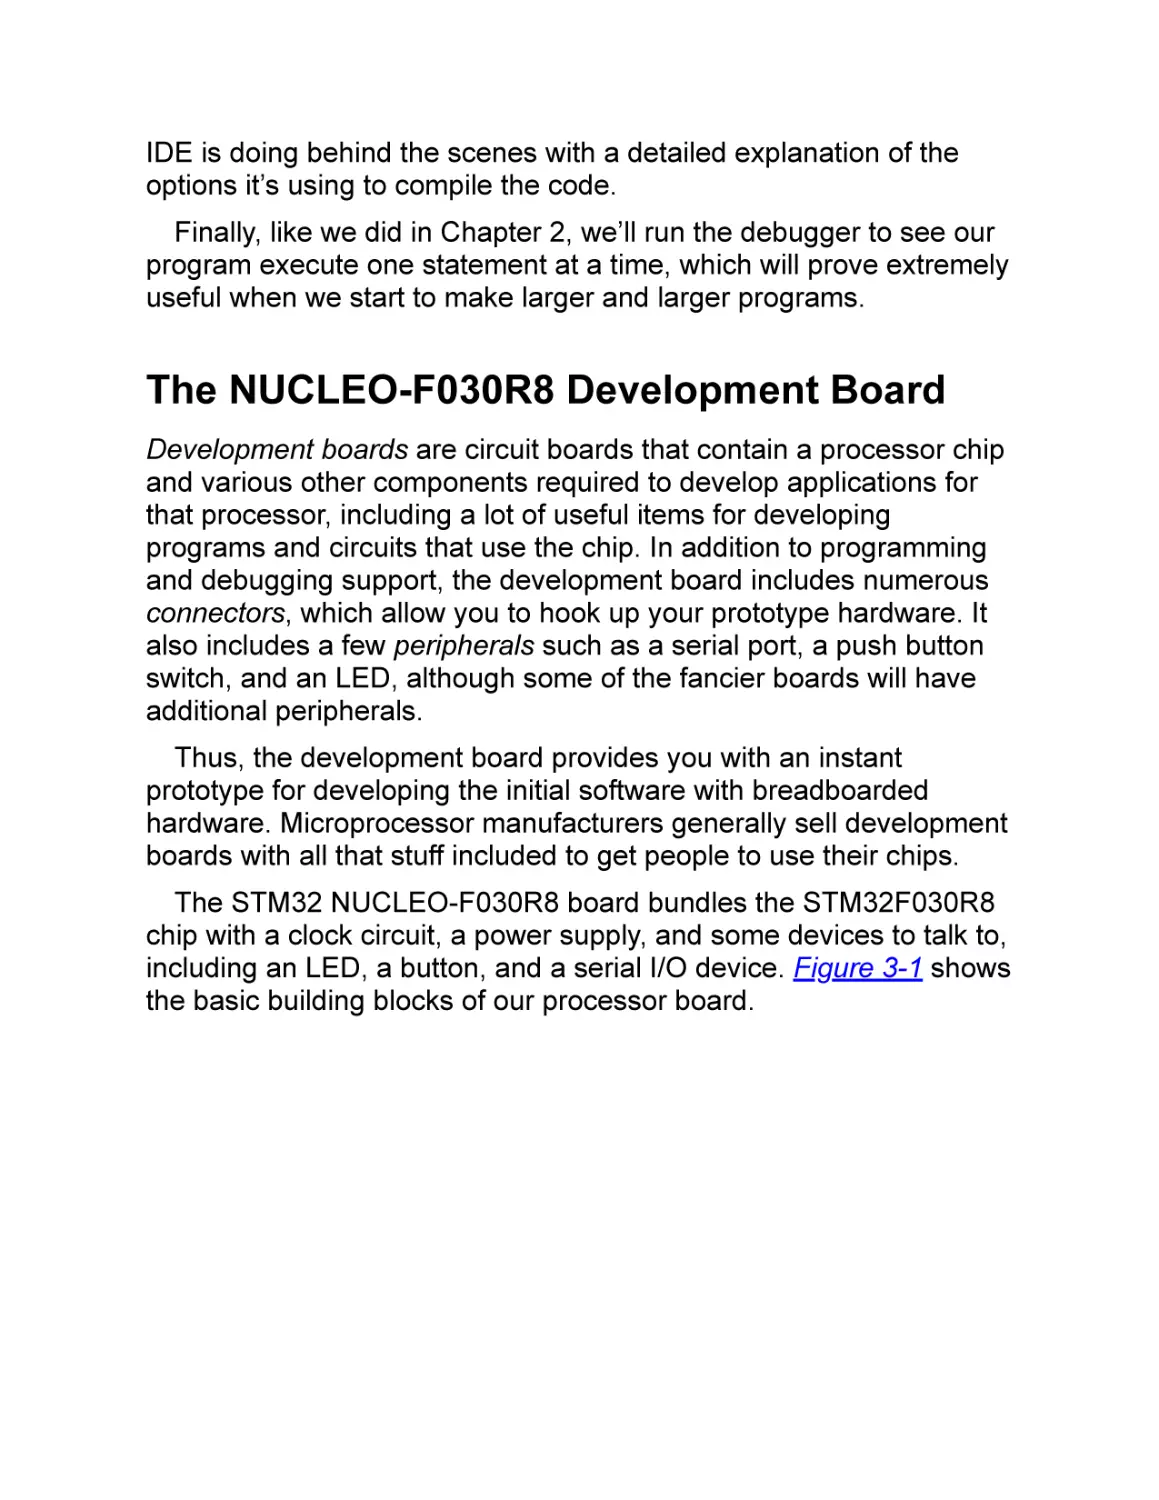 The NUCLEO-F030R8 Development Board